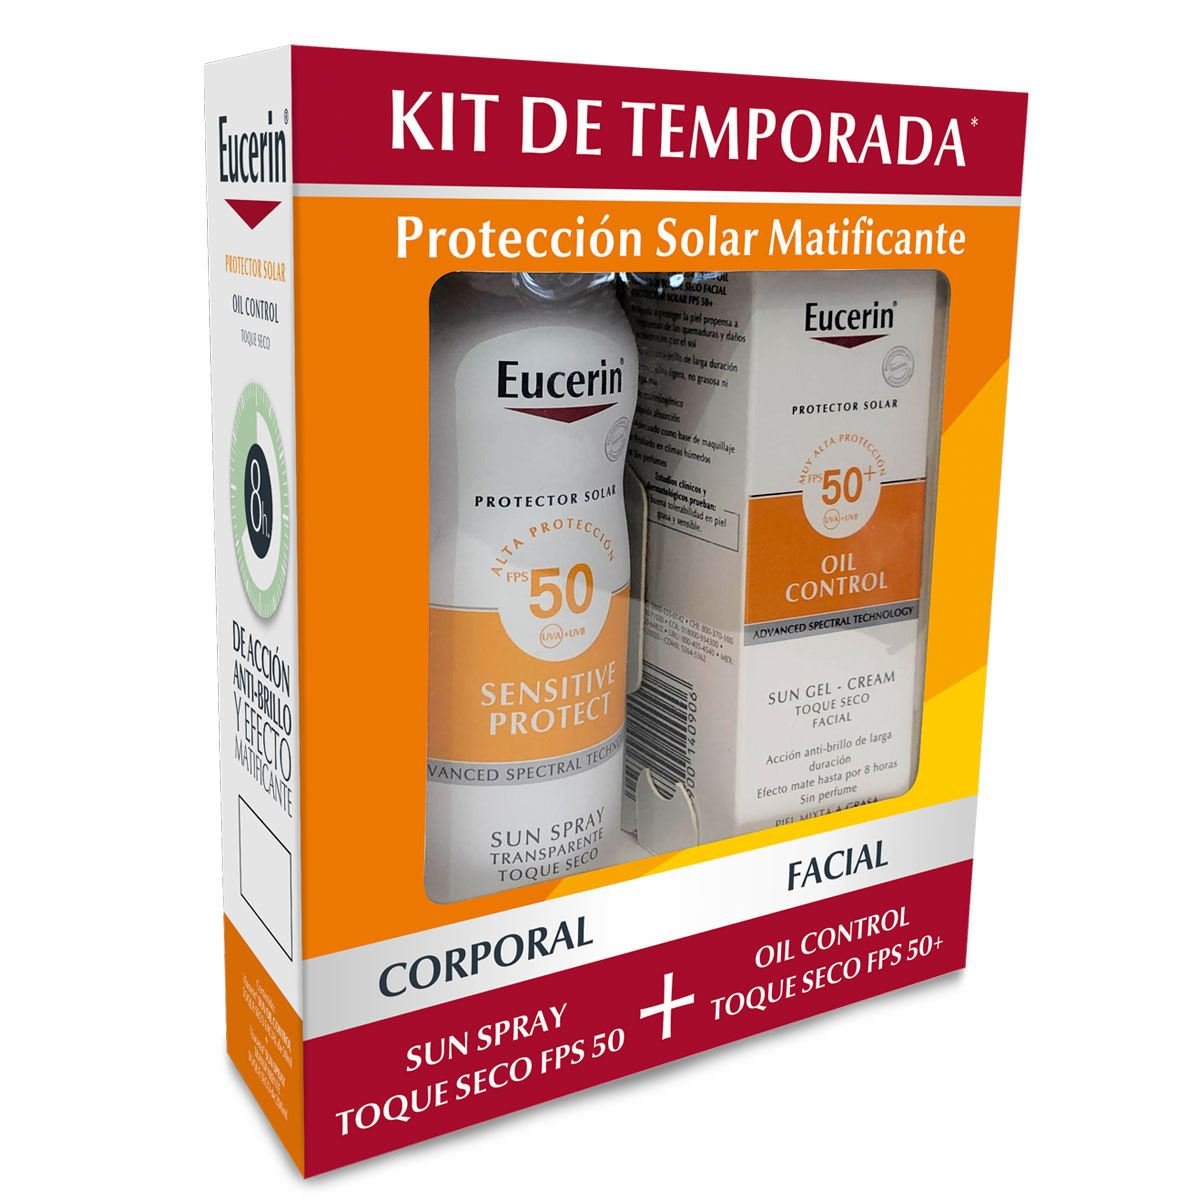 Kit protector solar matificante Eucerin (Oil Control + Aerosol toque seco)